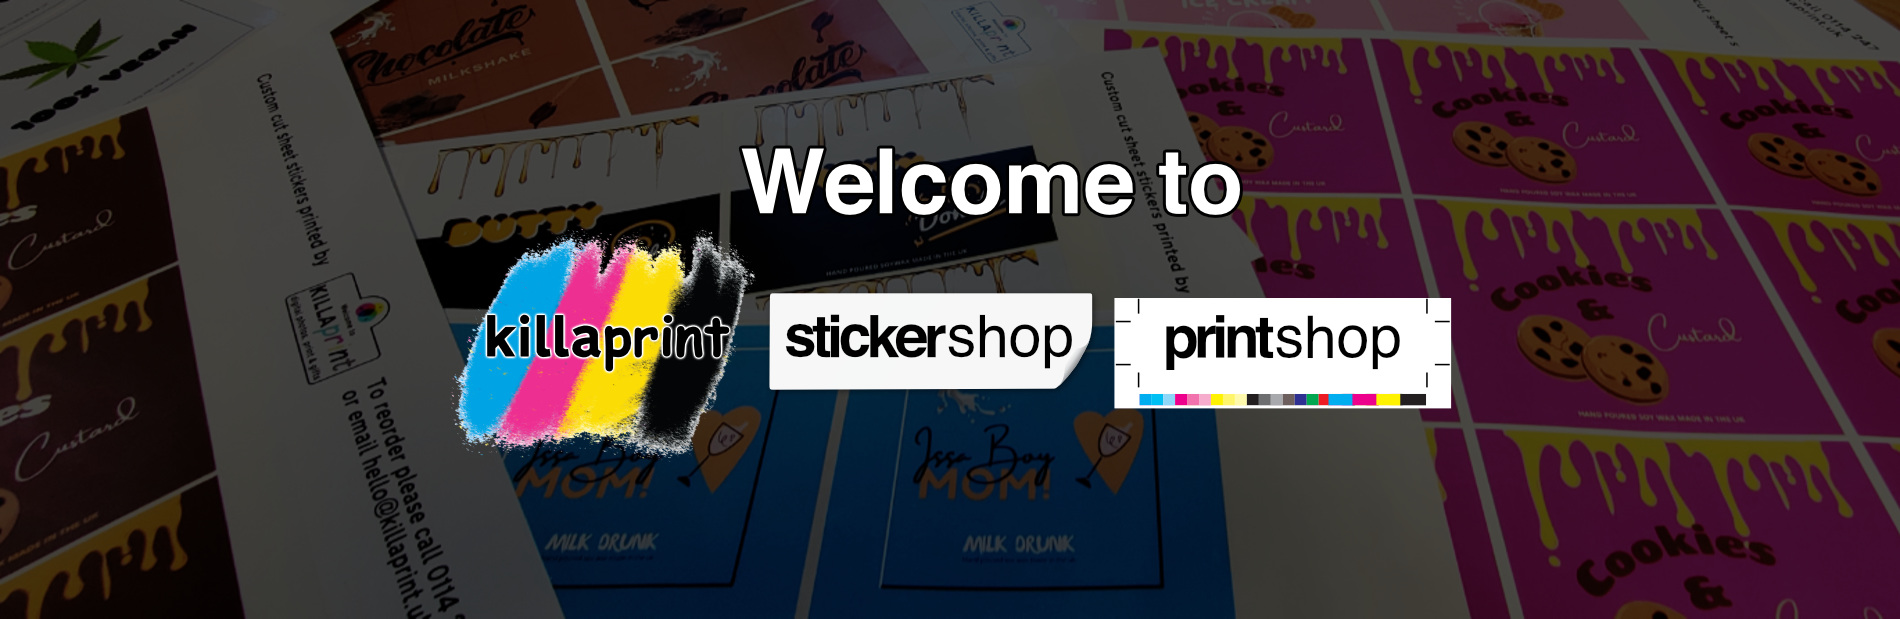 killaprint stickershop printshop website header